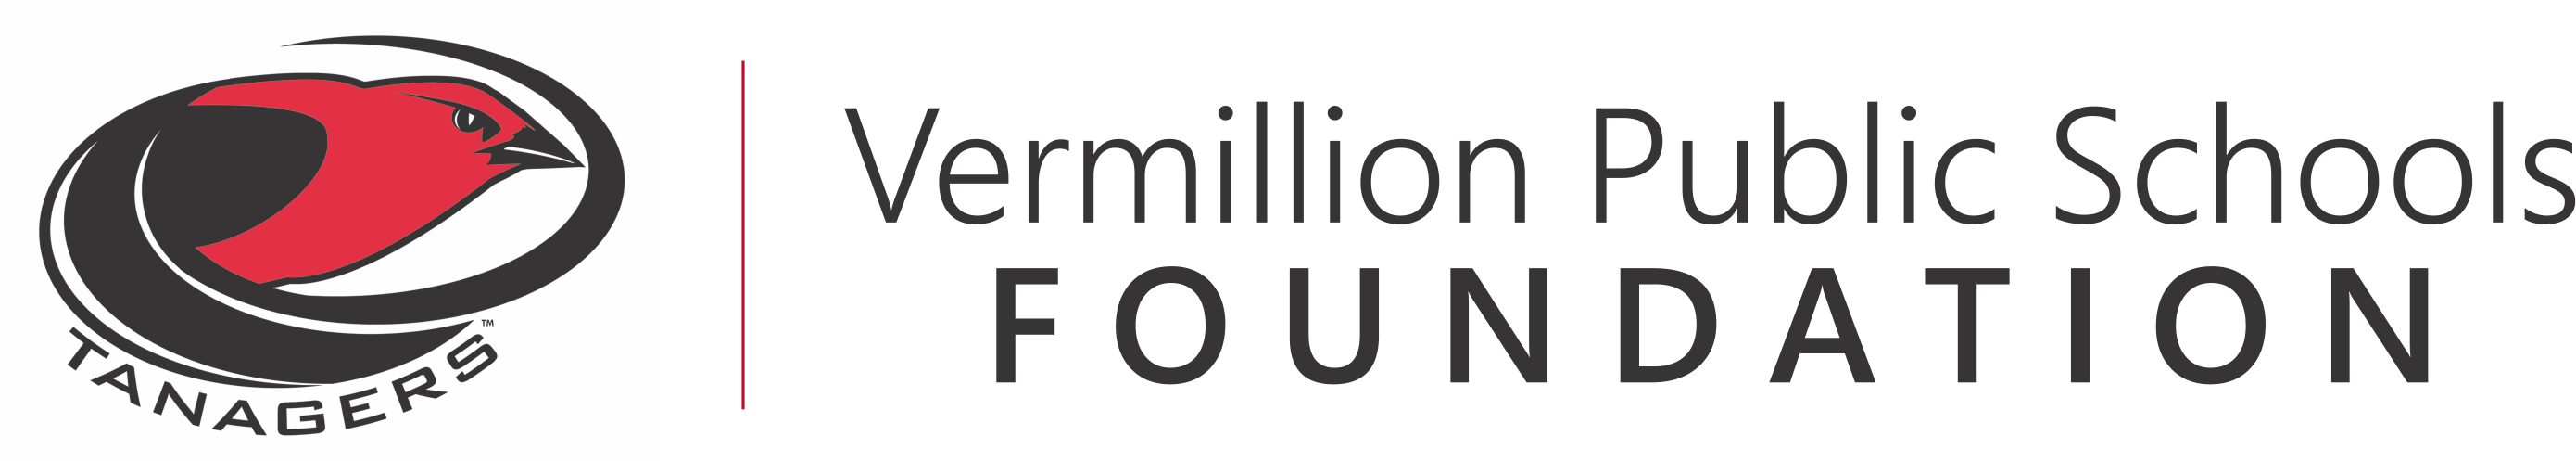 Vermillion Public Schools Foundation